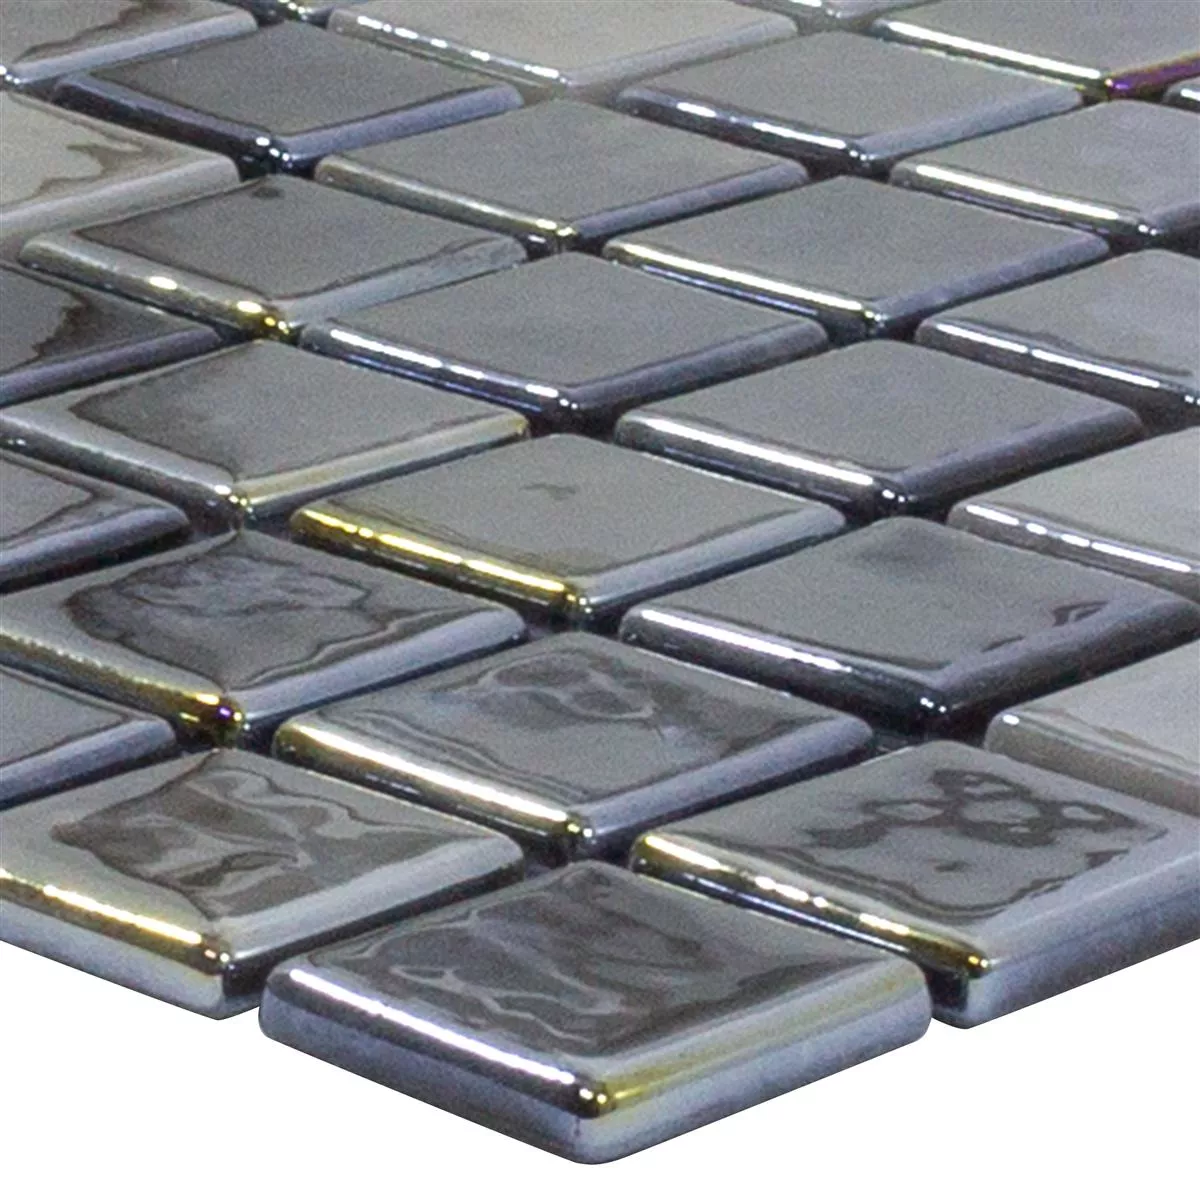 Mozaiki Szklana Płytki Silvertown Antracyt Metallic 25x25mm